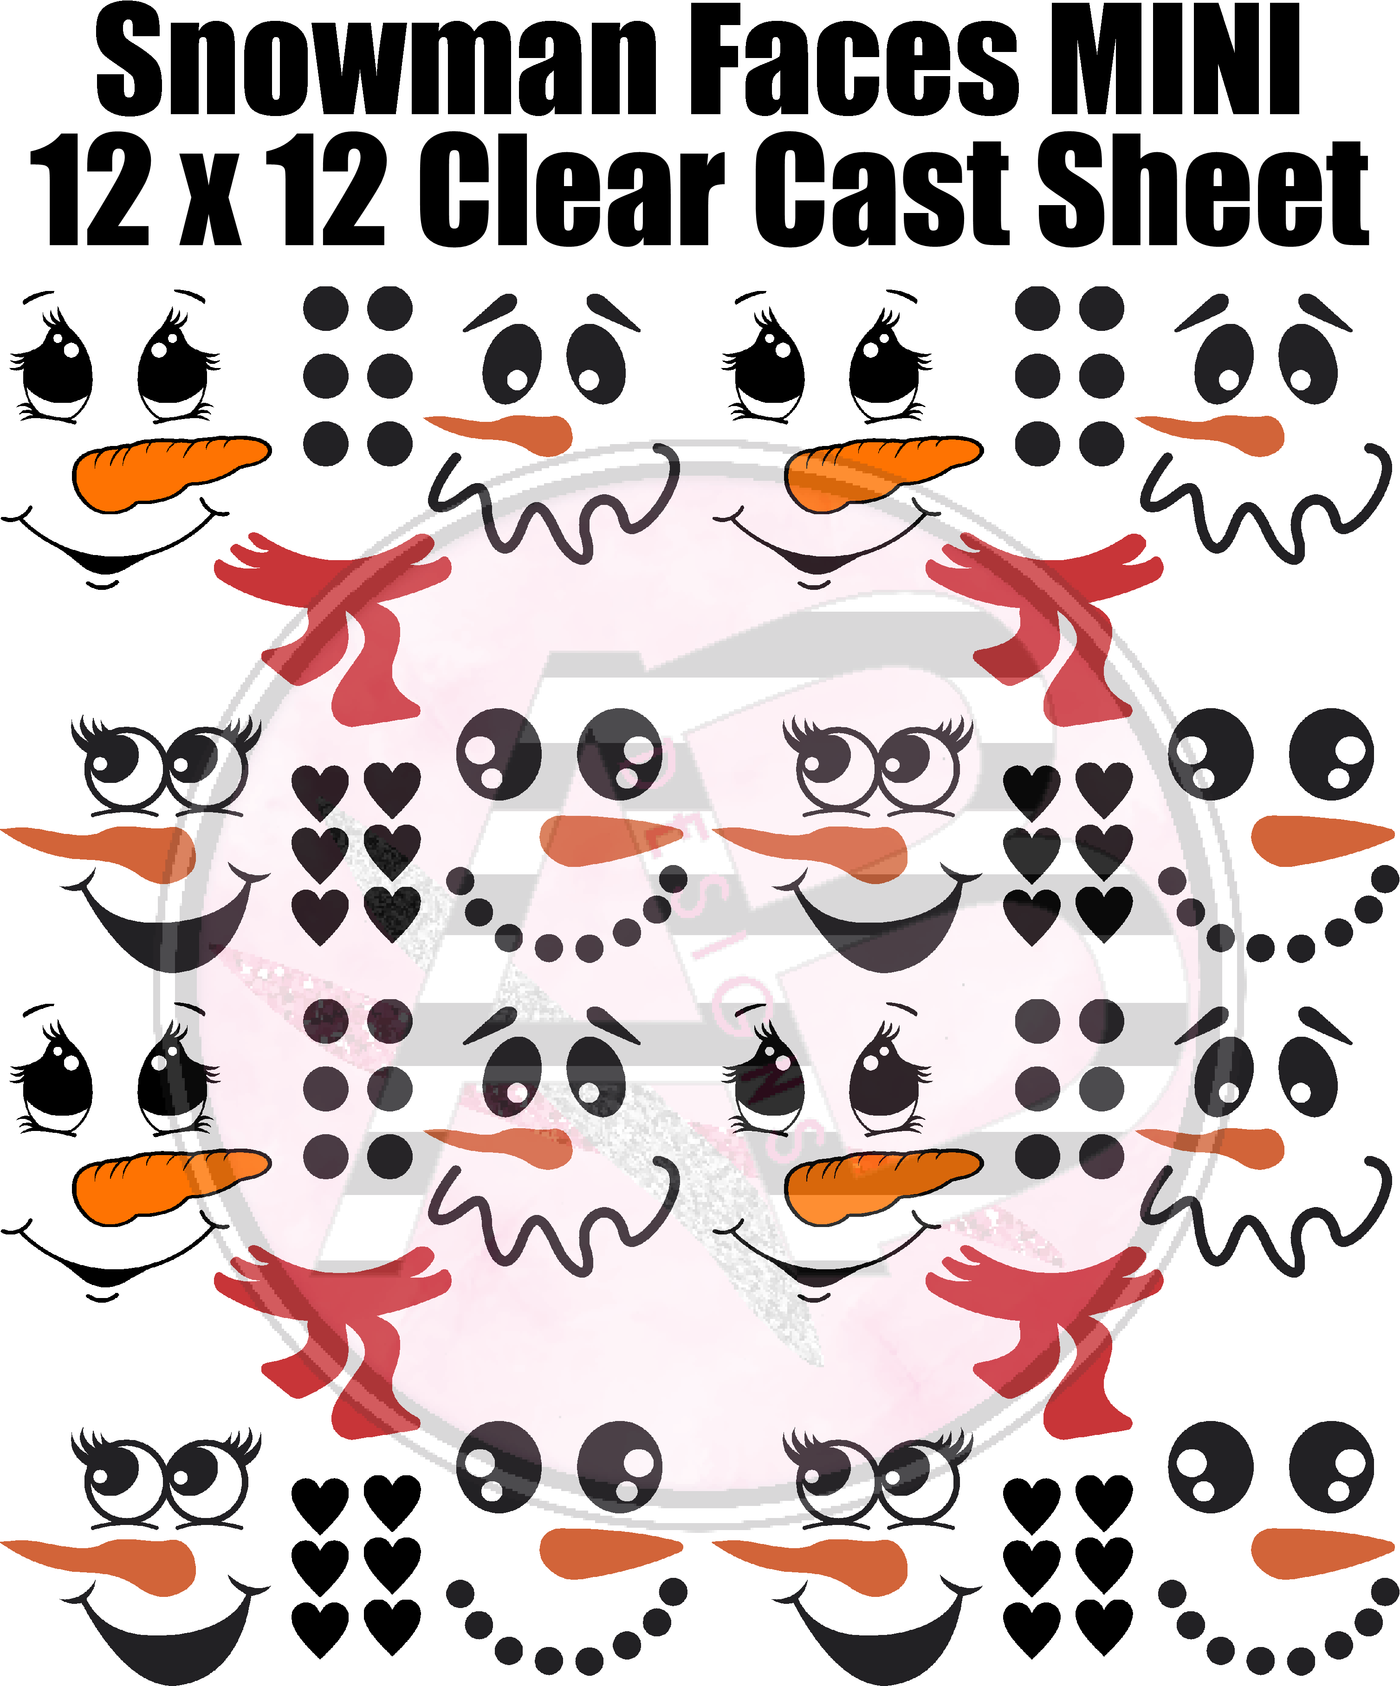 Snowman Faces Mini Full Sheet 12x12 Clear Cast Decal